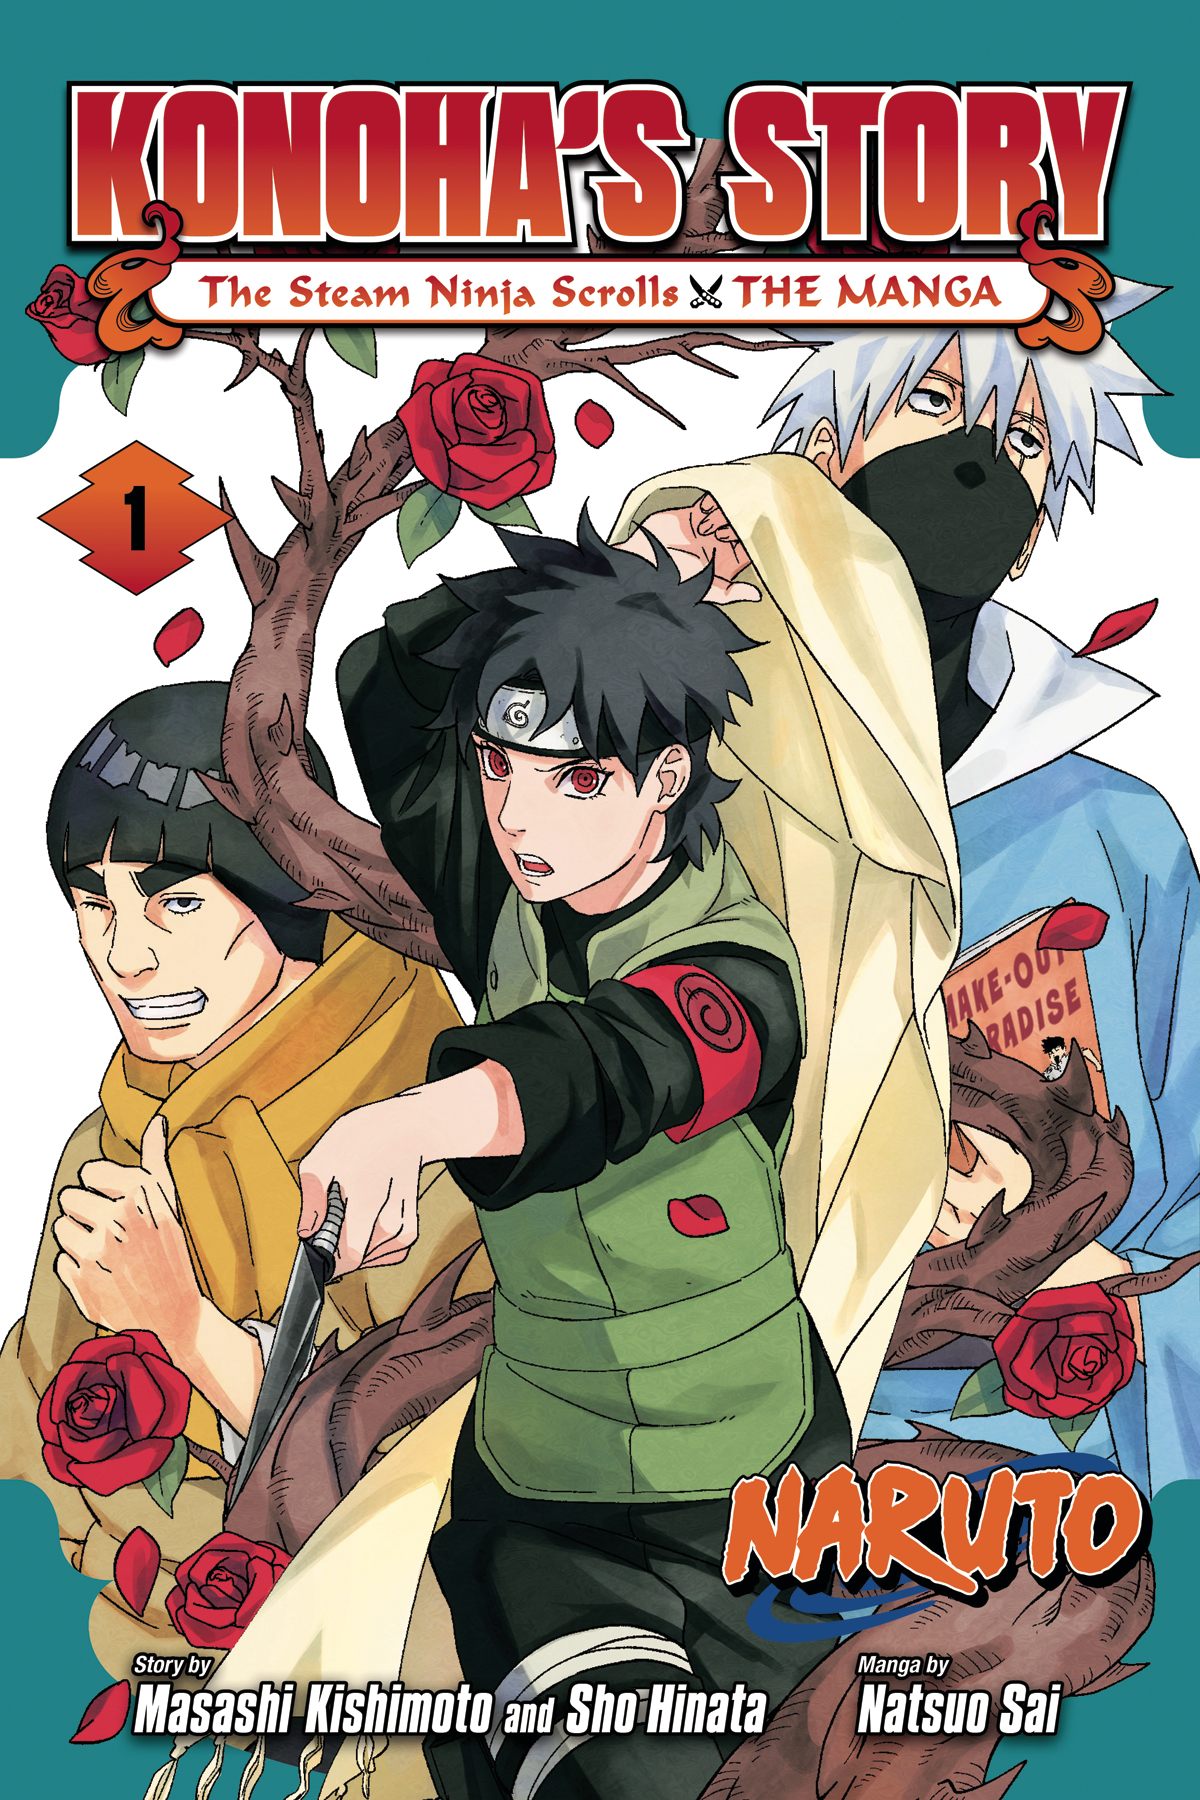 Naruto Konoha's Story Steam Ninja Scrolls Manga Volume 1